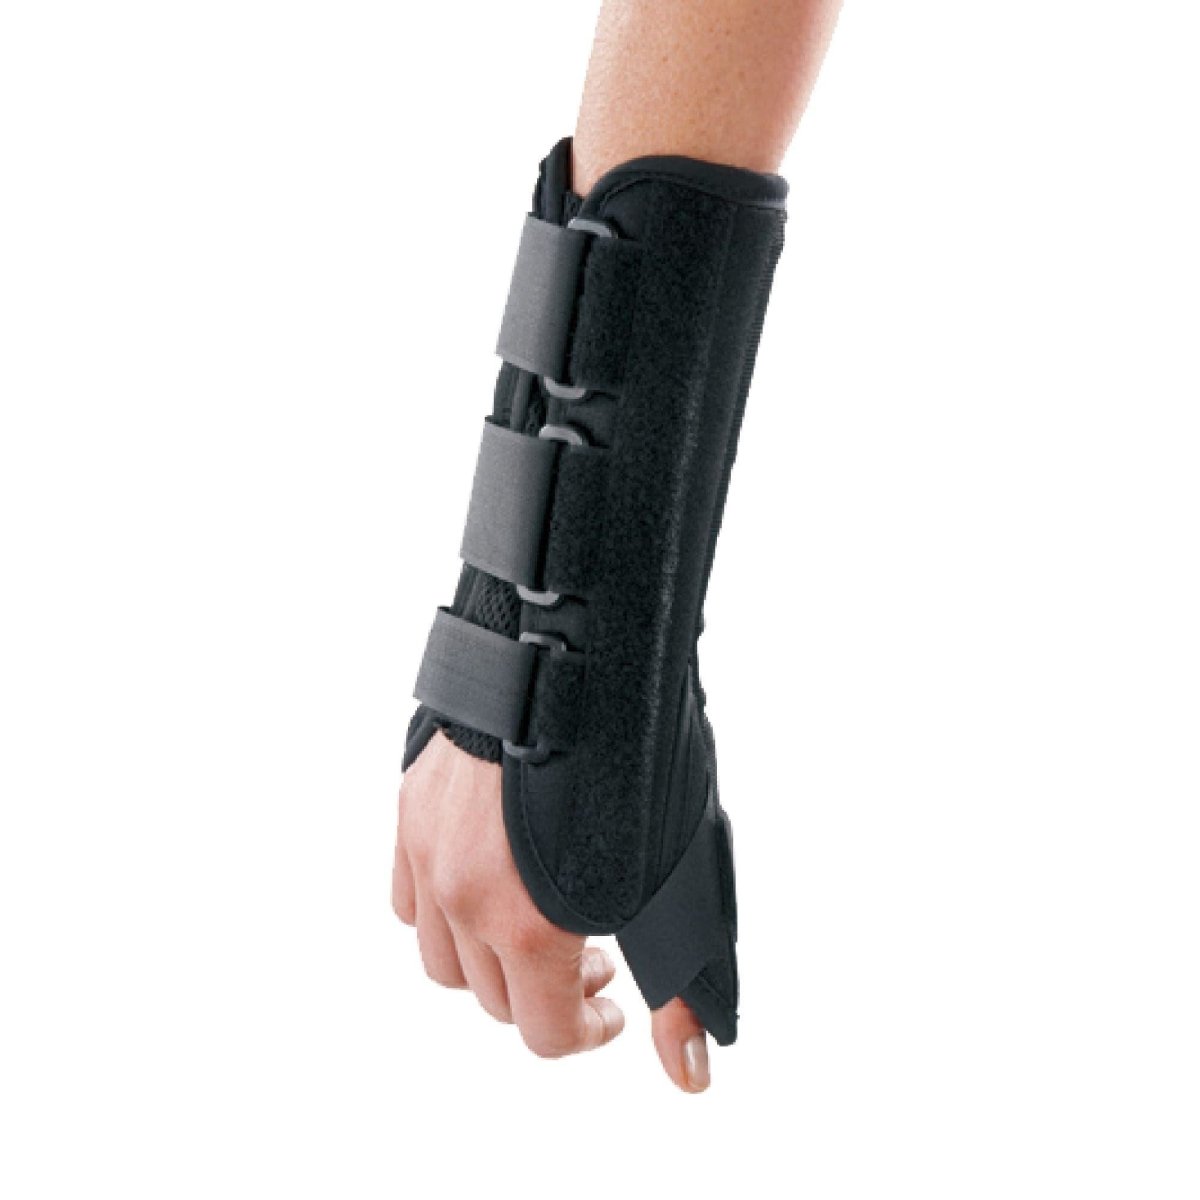 Breg Wrist Pro with Thumb Spica - 100424-110 - Brace Direct